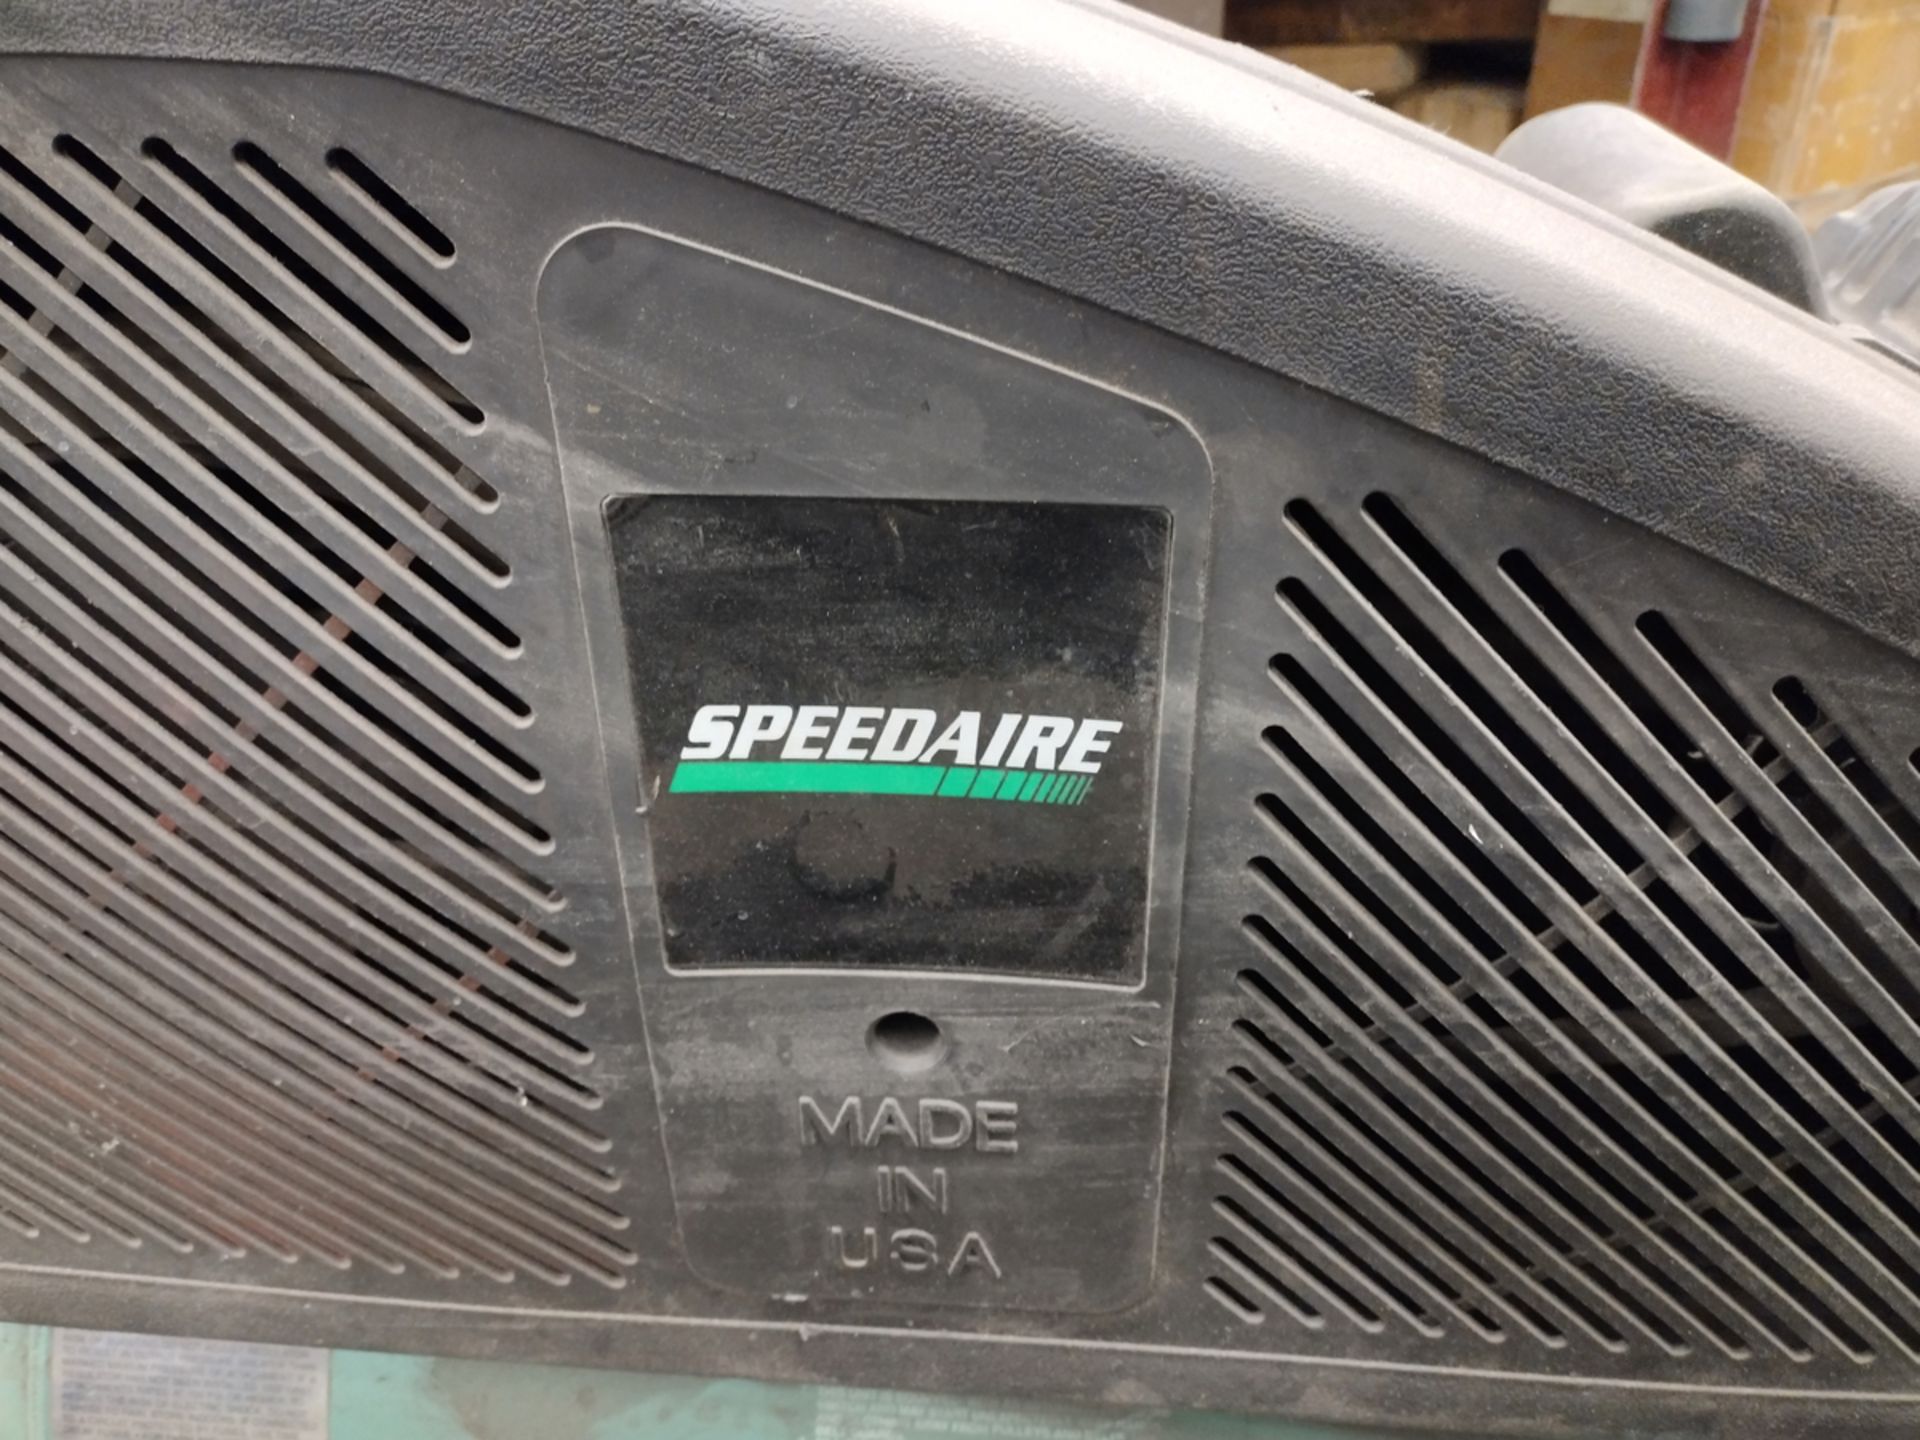 Speedaire 20 Gallon Portable Air Compressor - Image 7 of 8